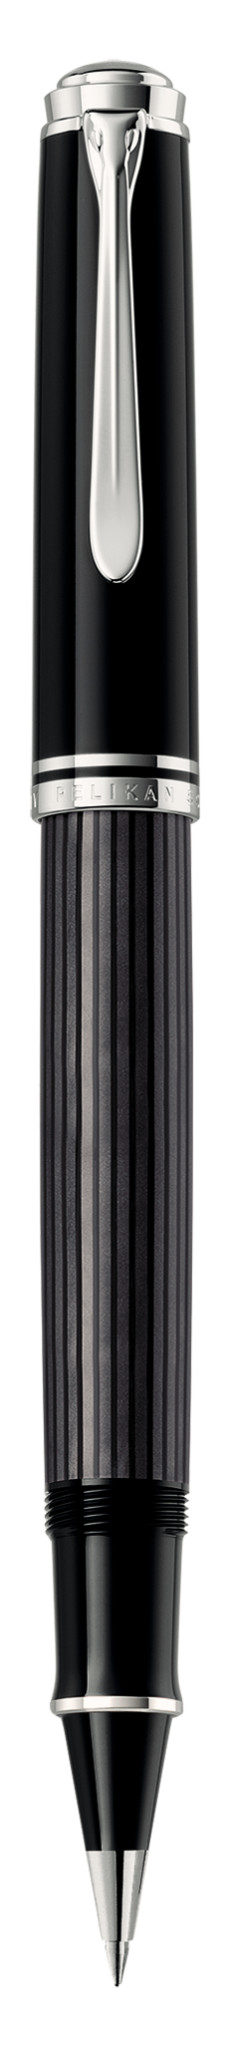 Pelikan Rollerball Pen Souverän® 805 Stresemann Black Anthracite